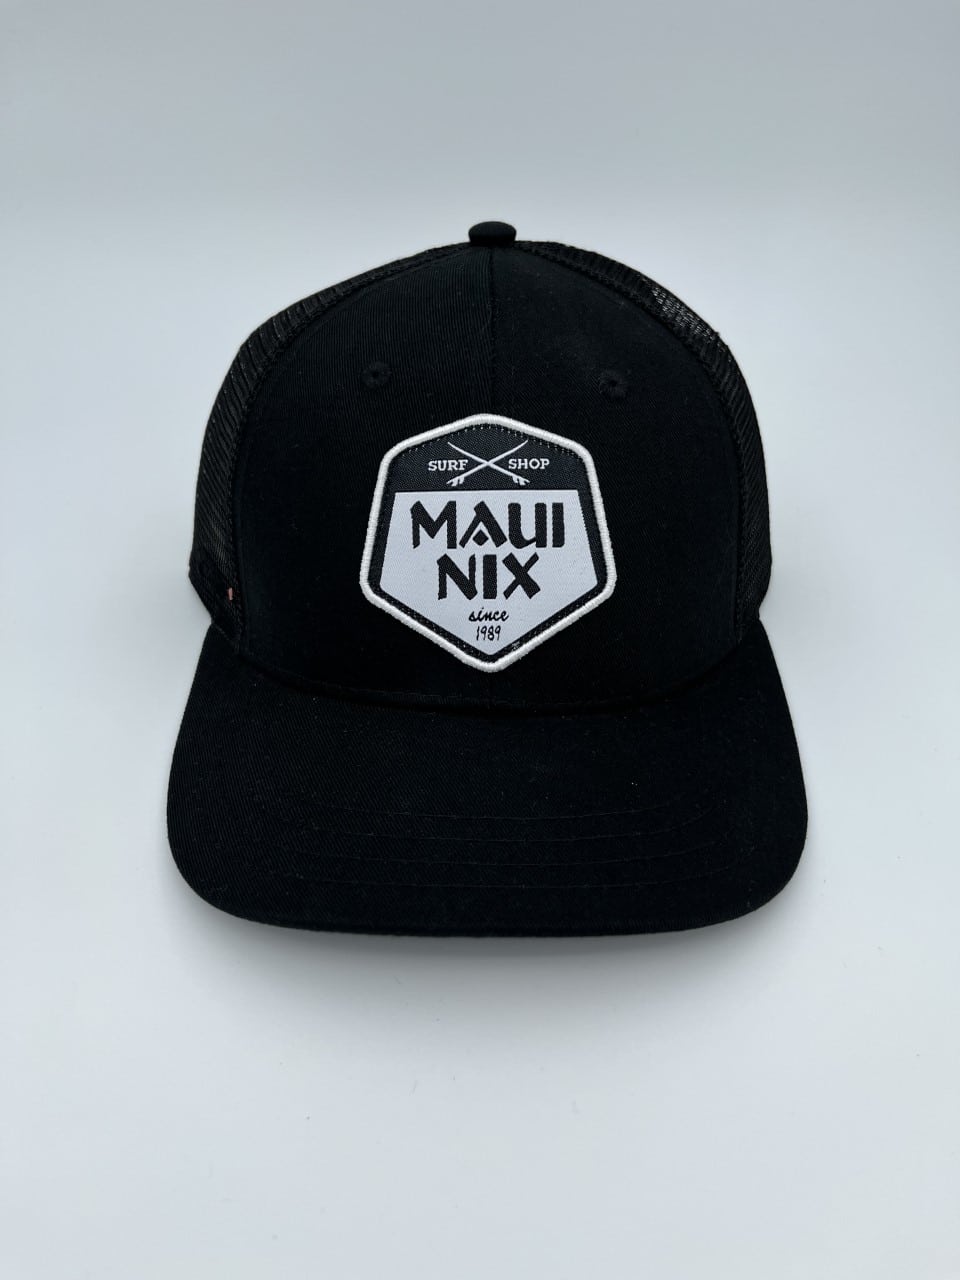 MAUI NIX SLIGHT CURVE HEXAGON HAT - Maui Nix Surf Shop